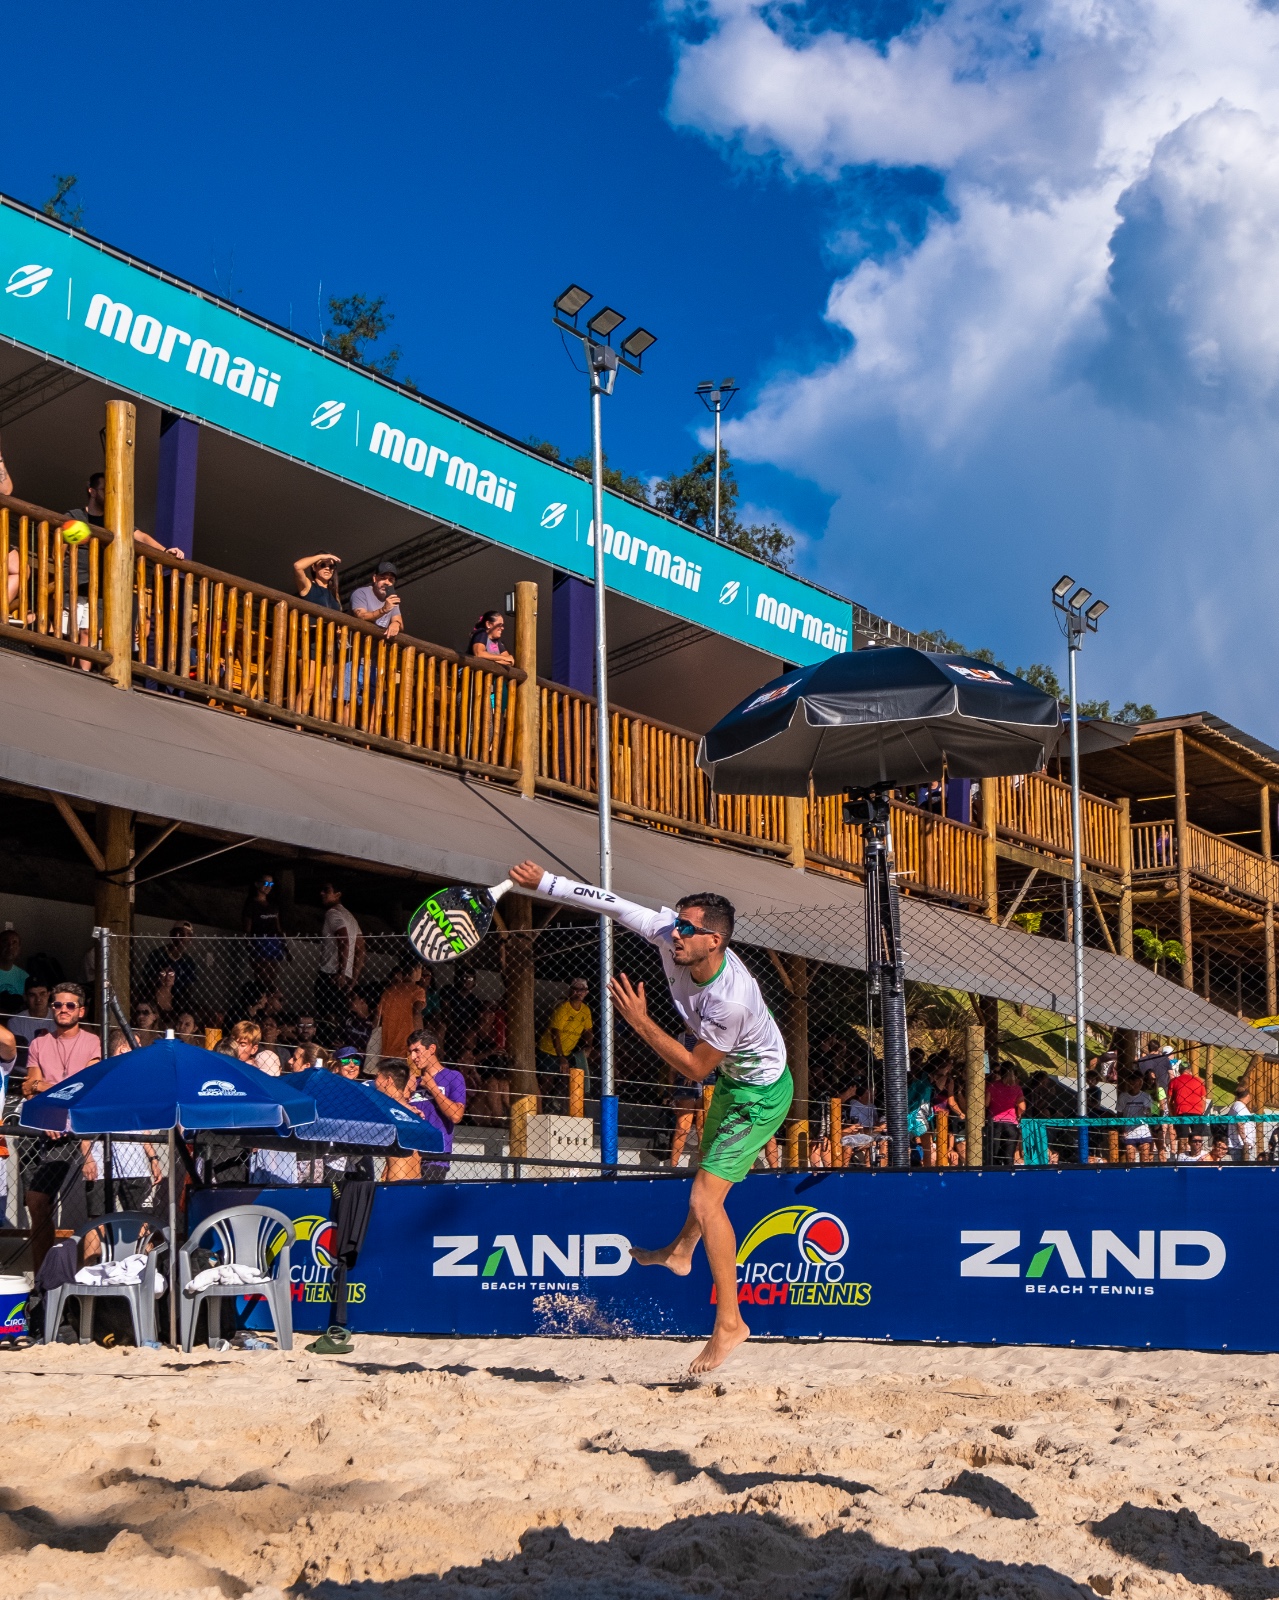 Etapa de Campinas do Circuito Beach Tennis começa nesta quinta-feira e estreia nova regra dos 6 metros